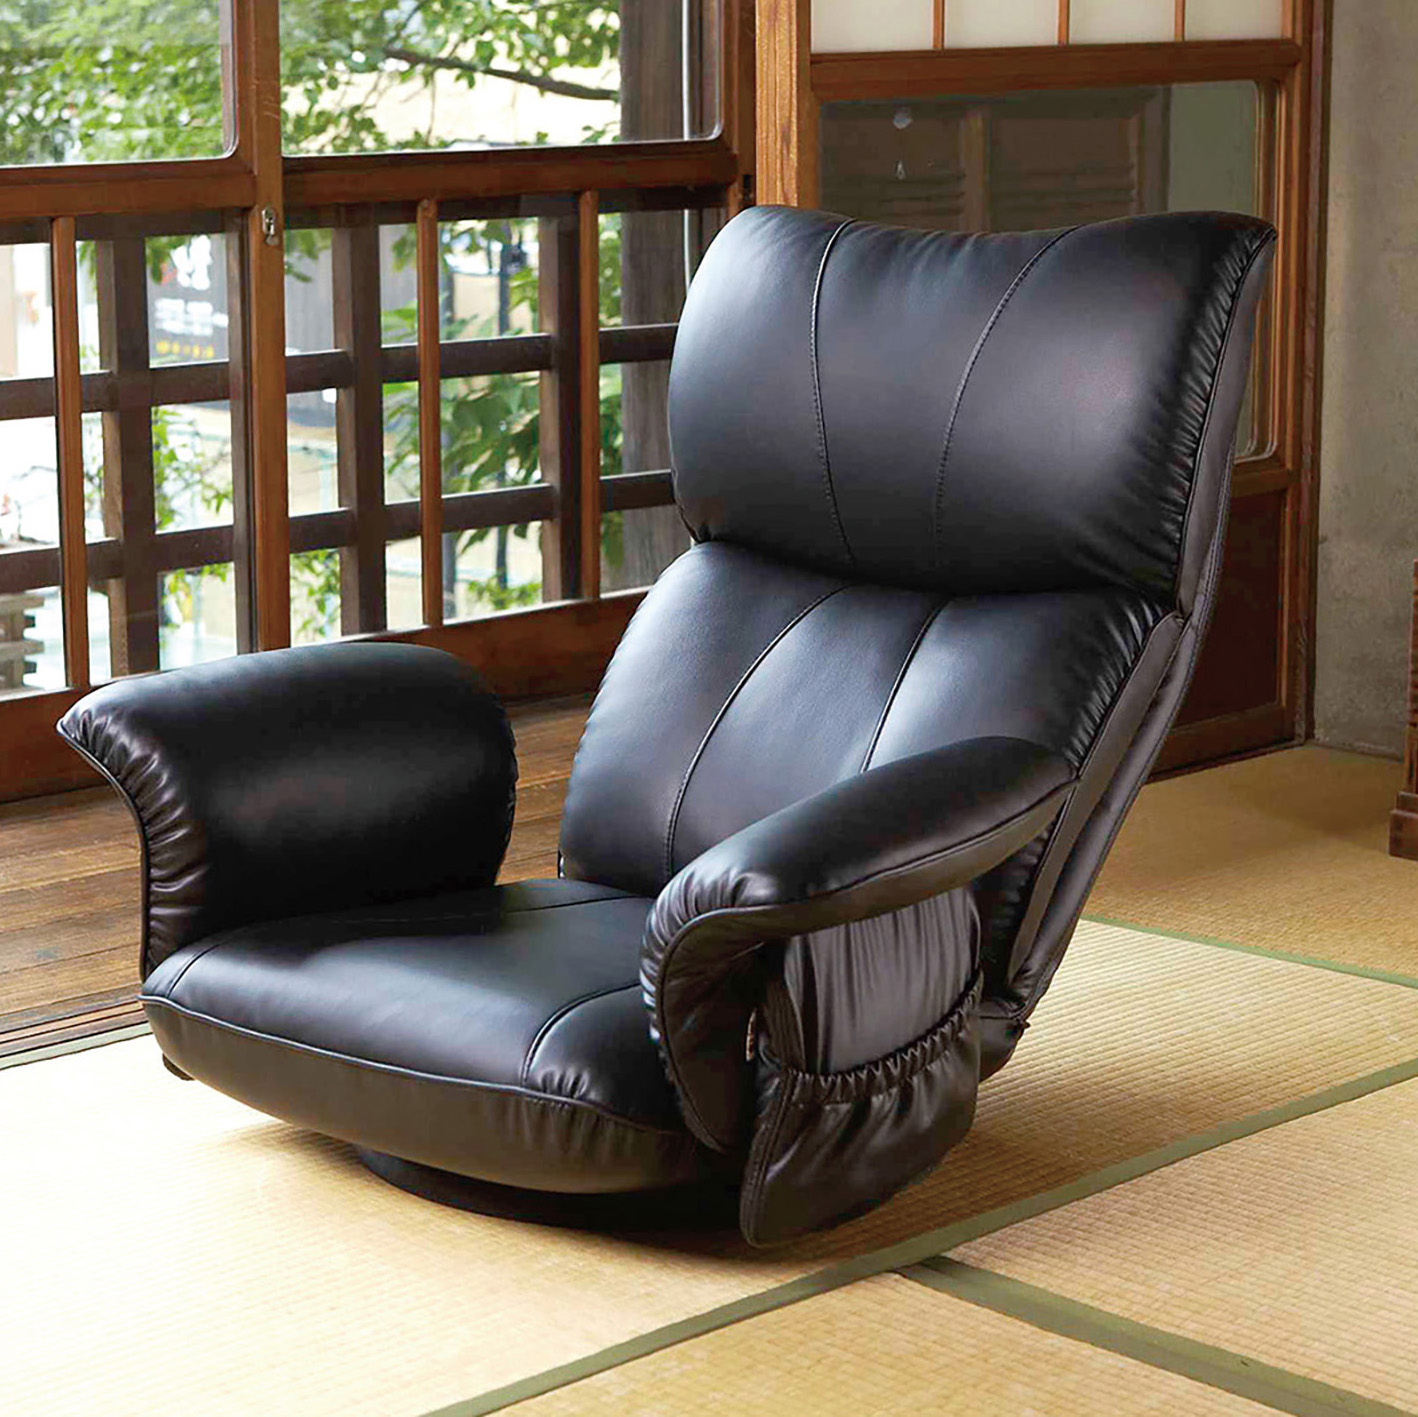 日本製座椅子 – 座椅子・家具メーカーの宮武製作所｜家具の製造販売 